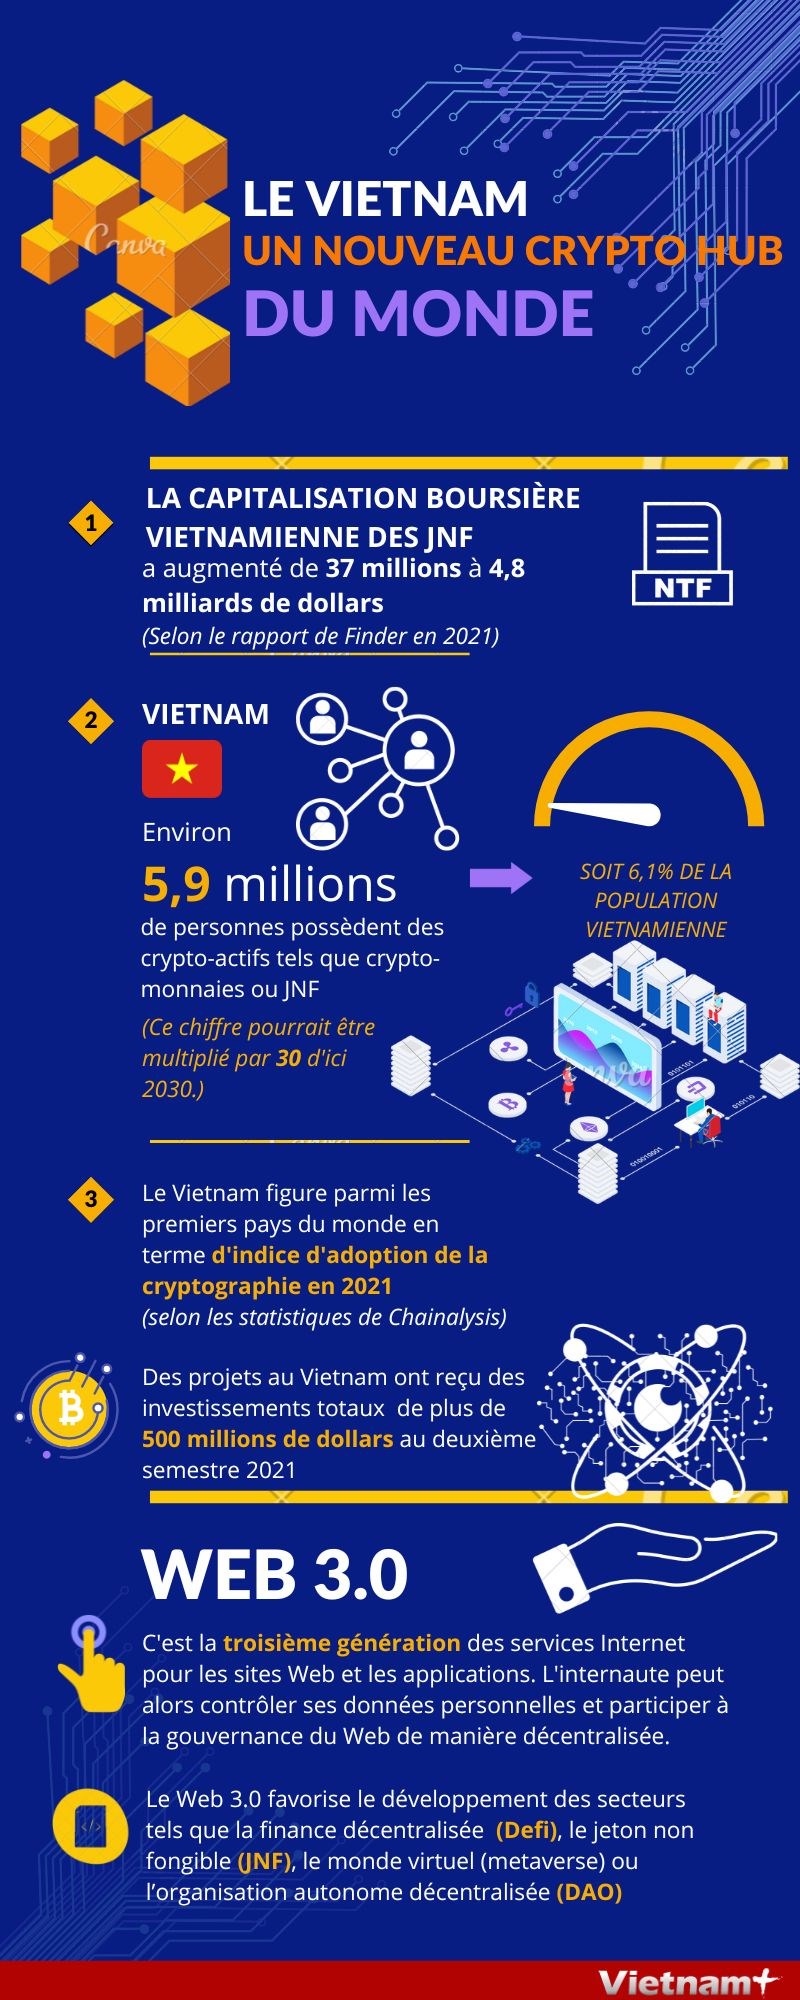 Le Vietnam, un nouveau crypto-hub du monde hinh anh 1